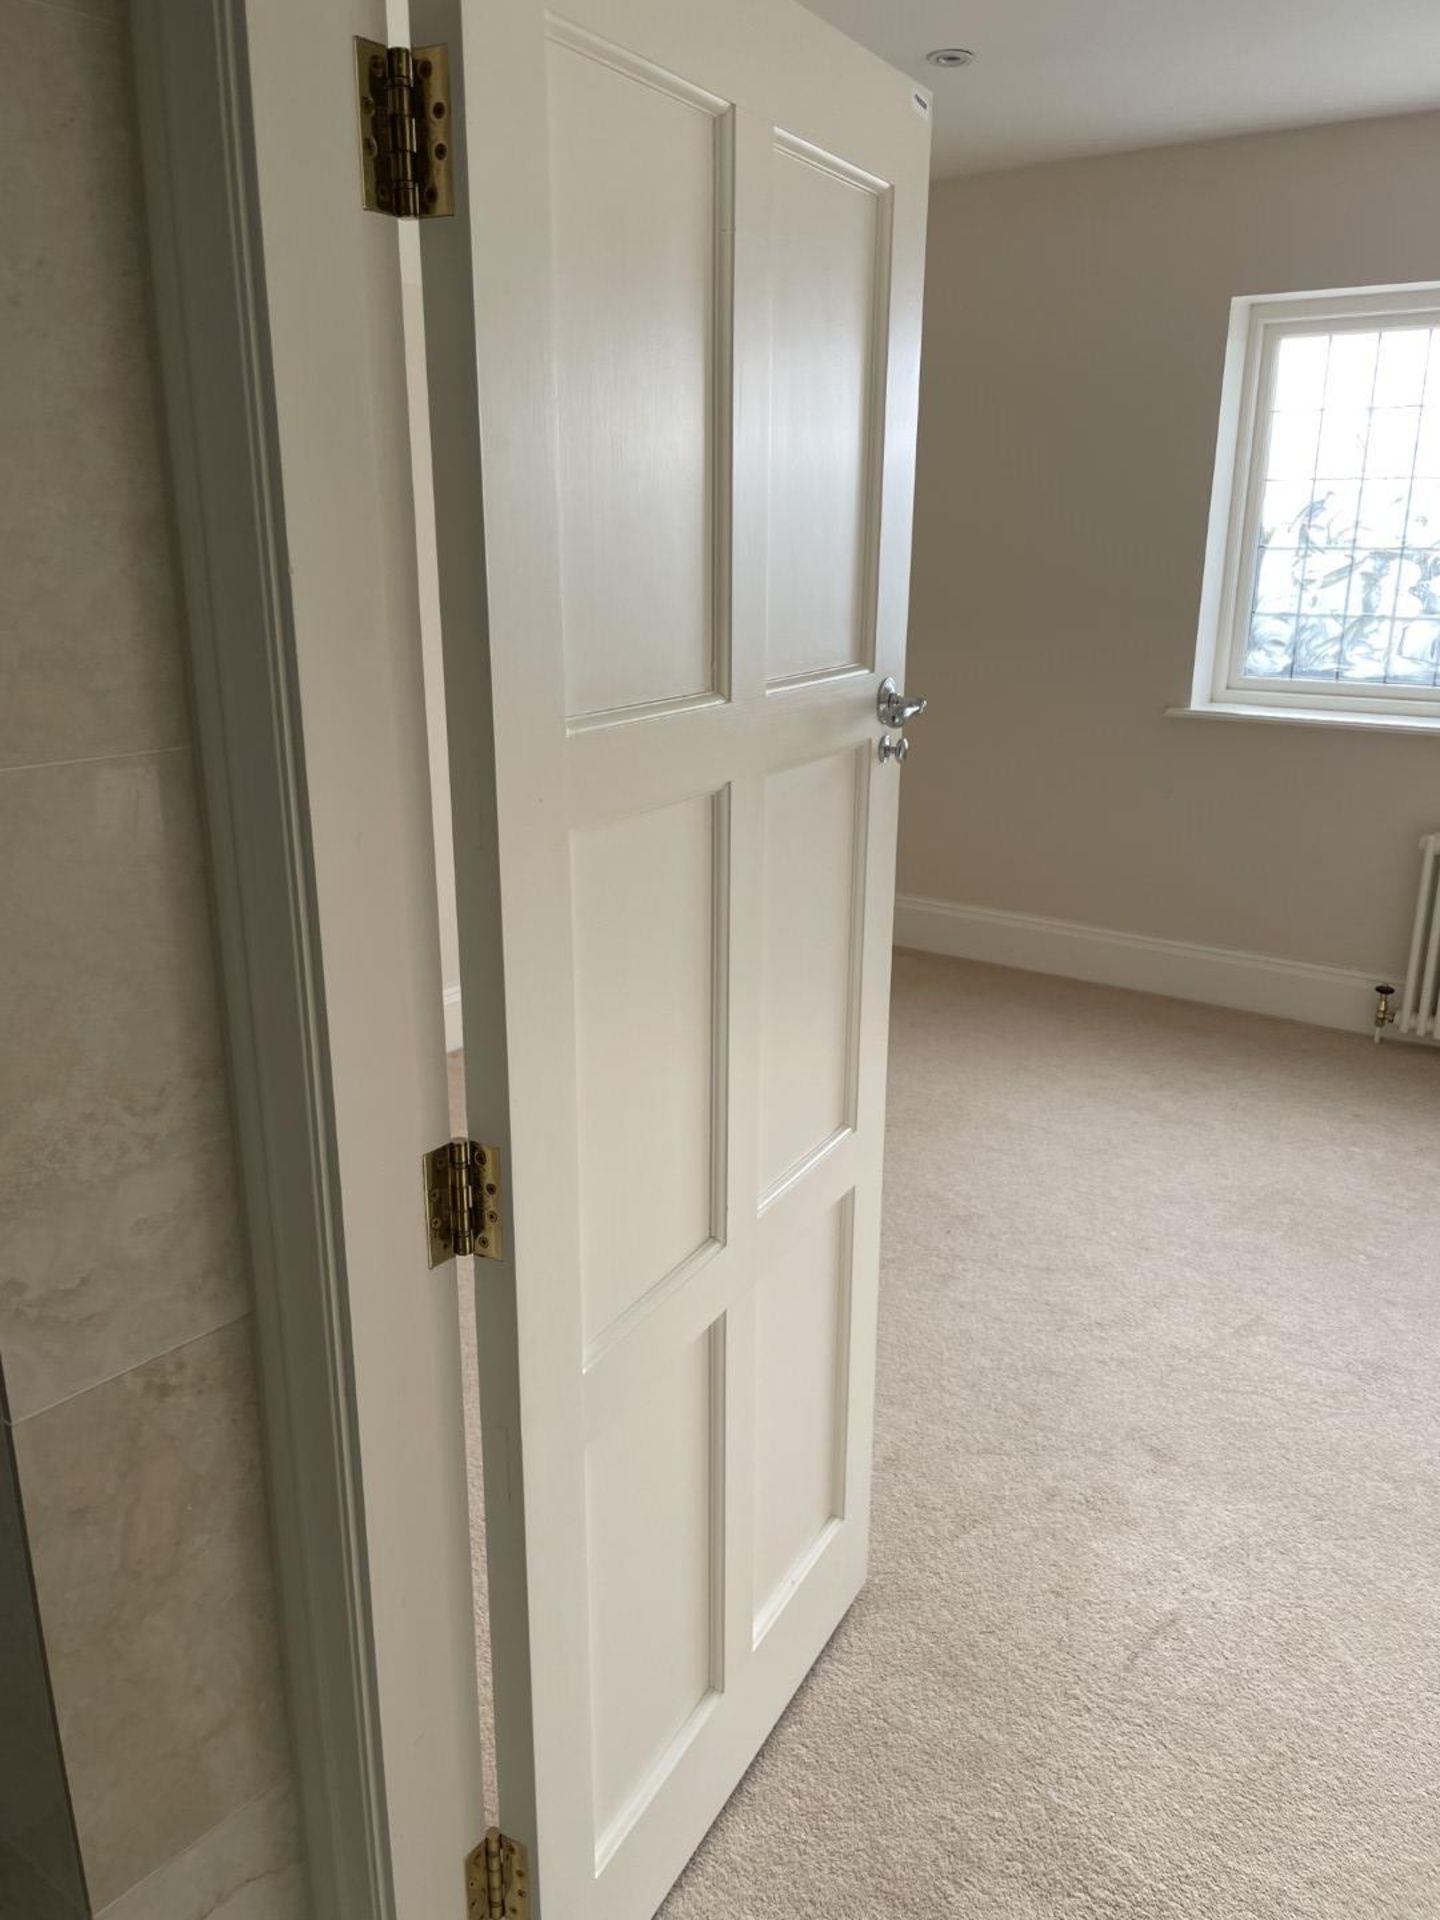 1 x Solid Wood Lockable Painted Internal Door in White - Image 11 of 11